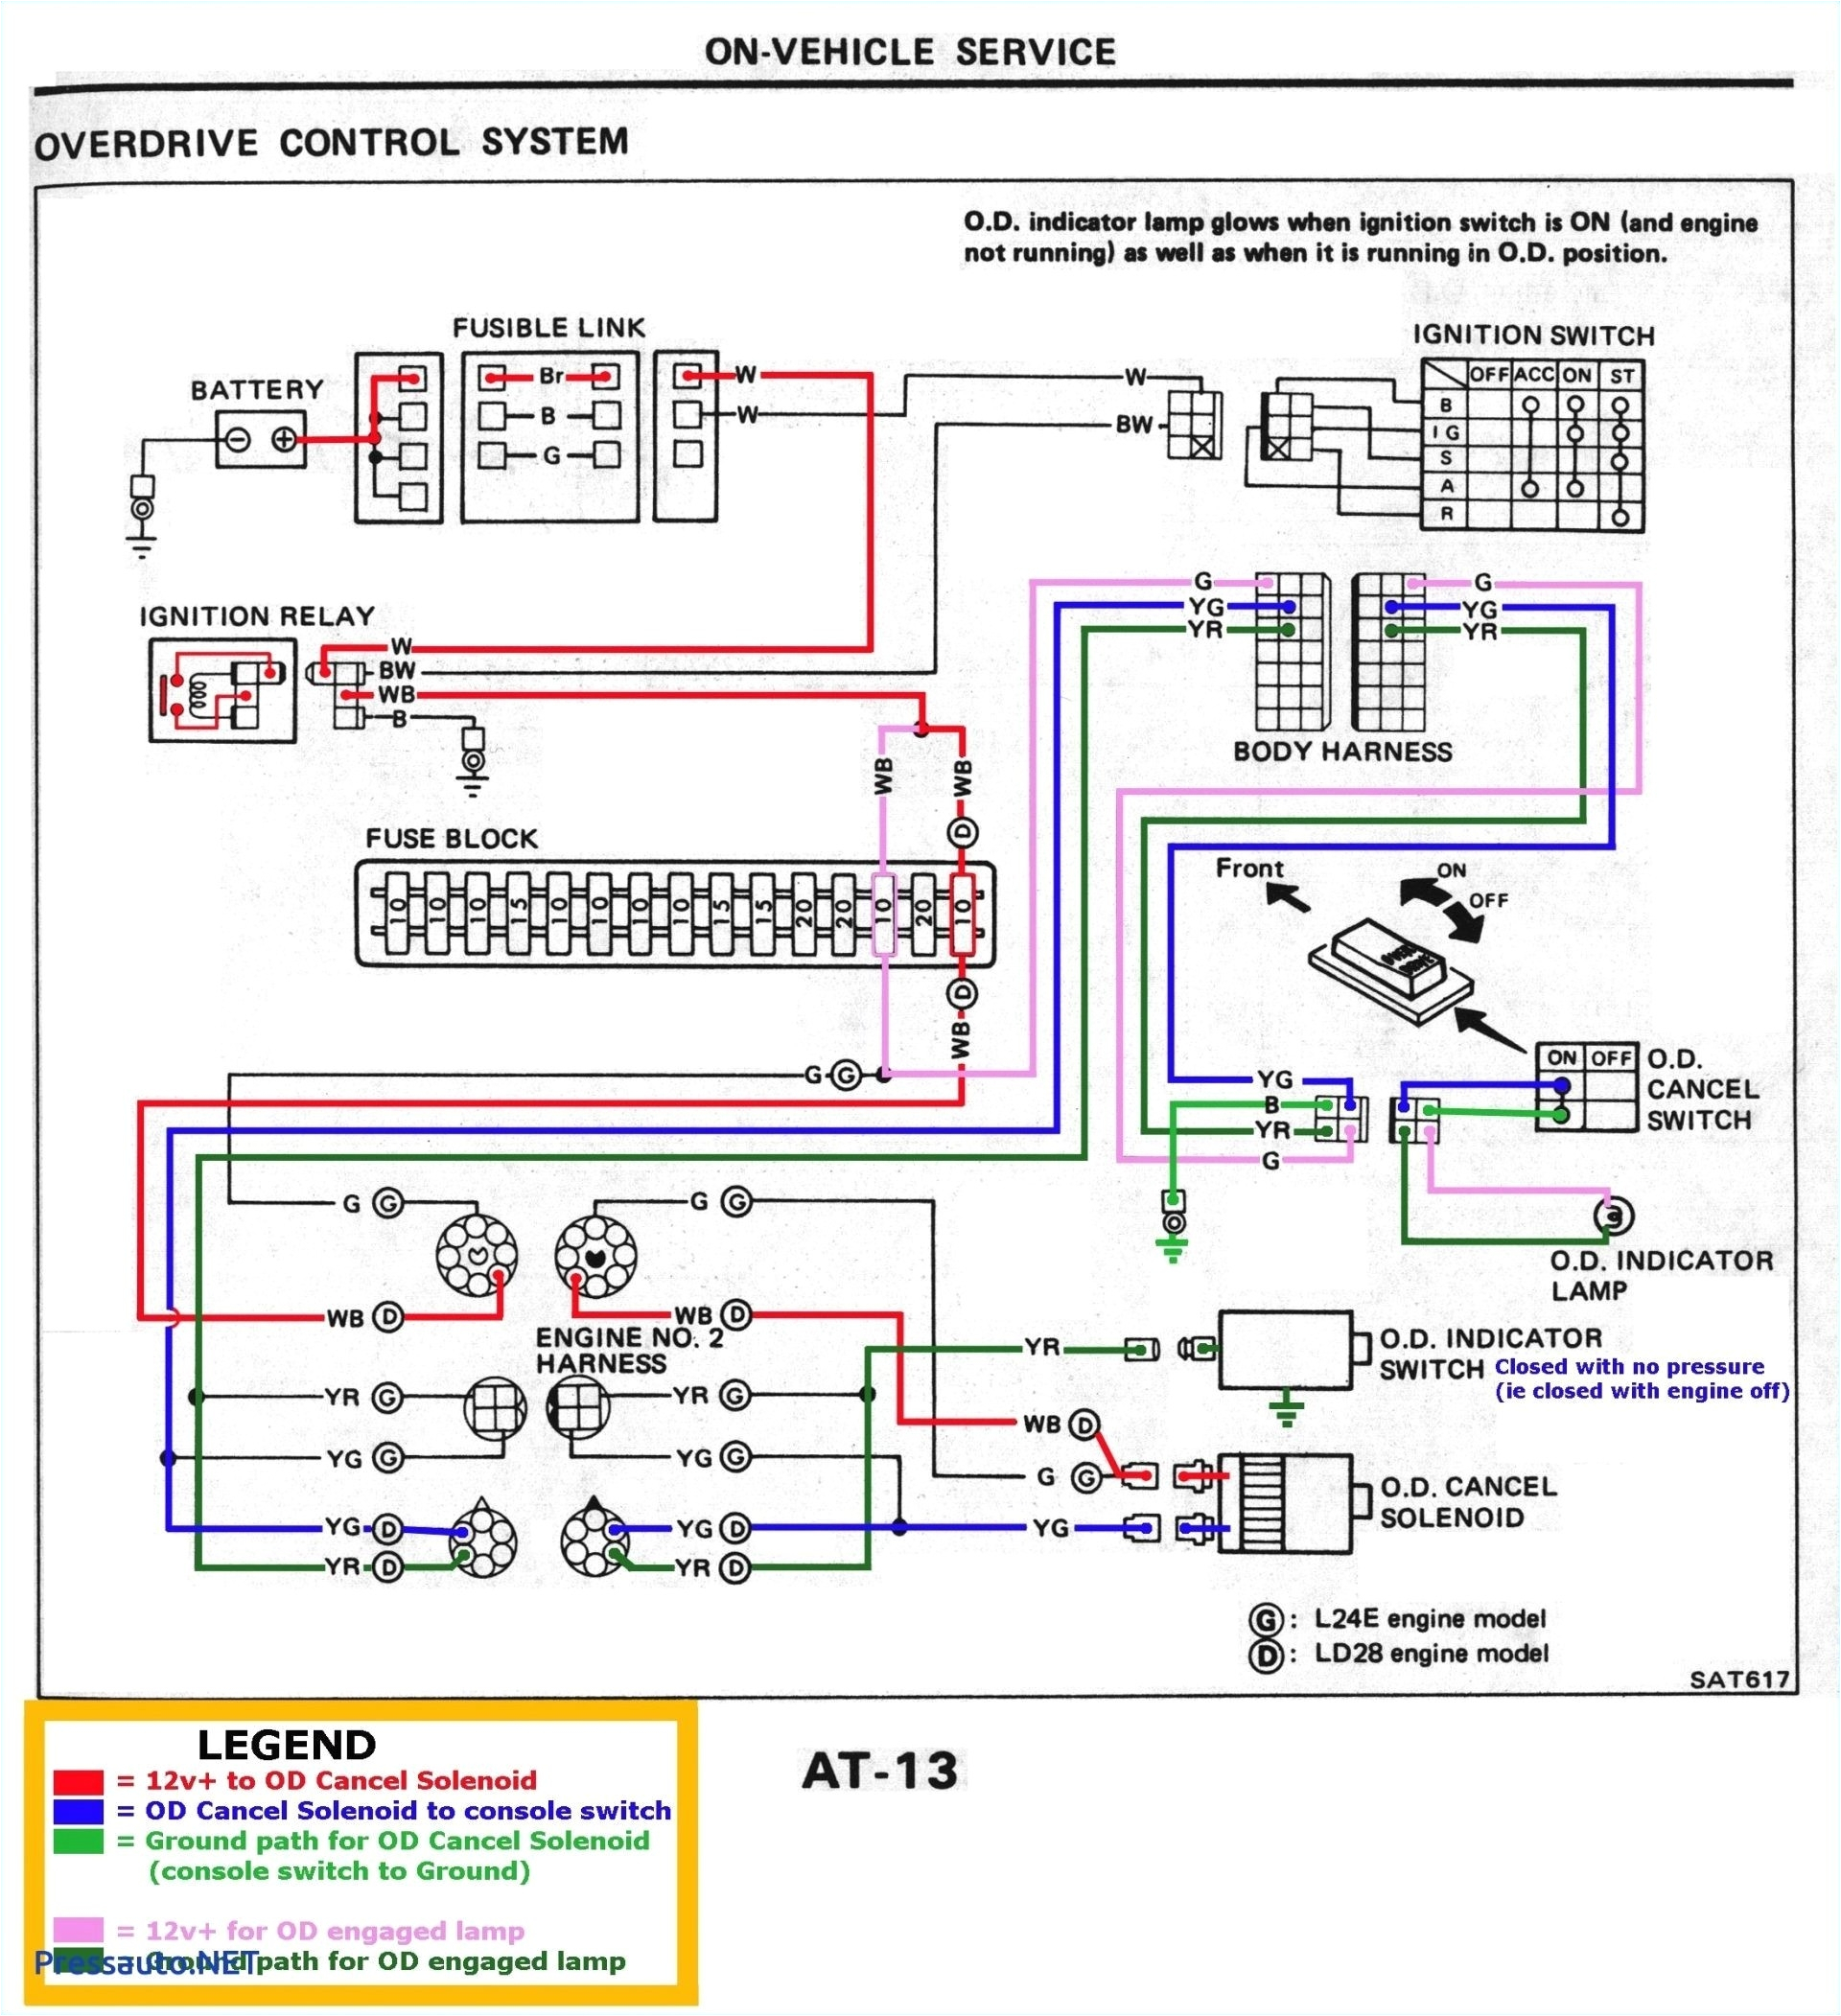 denso alternator wiring harness wiring diagram bots denso alternator wiring diagram nippondenso alternator wiring diagram